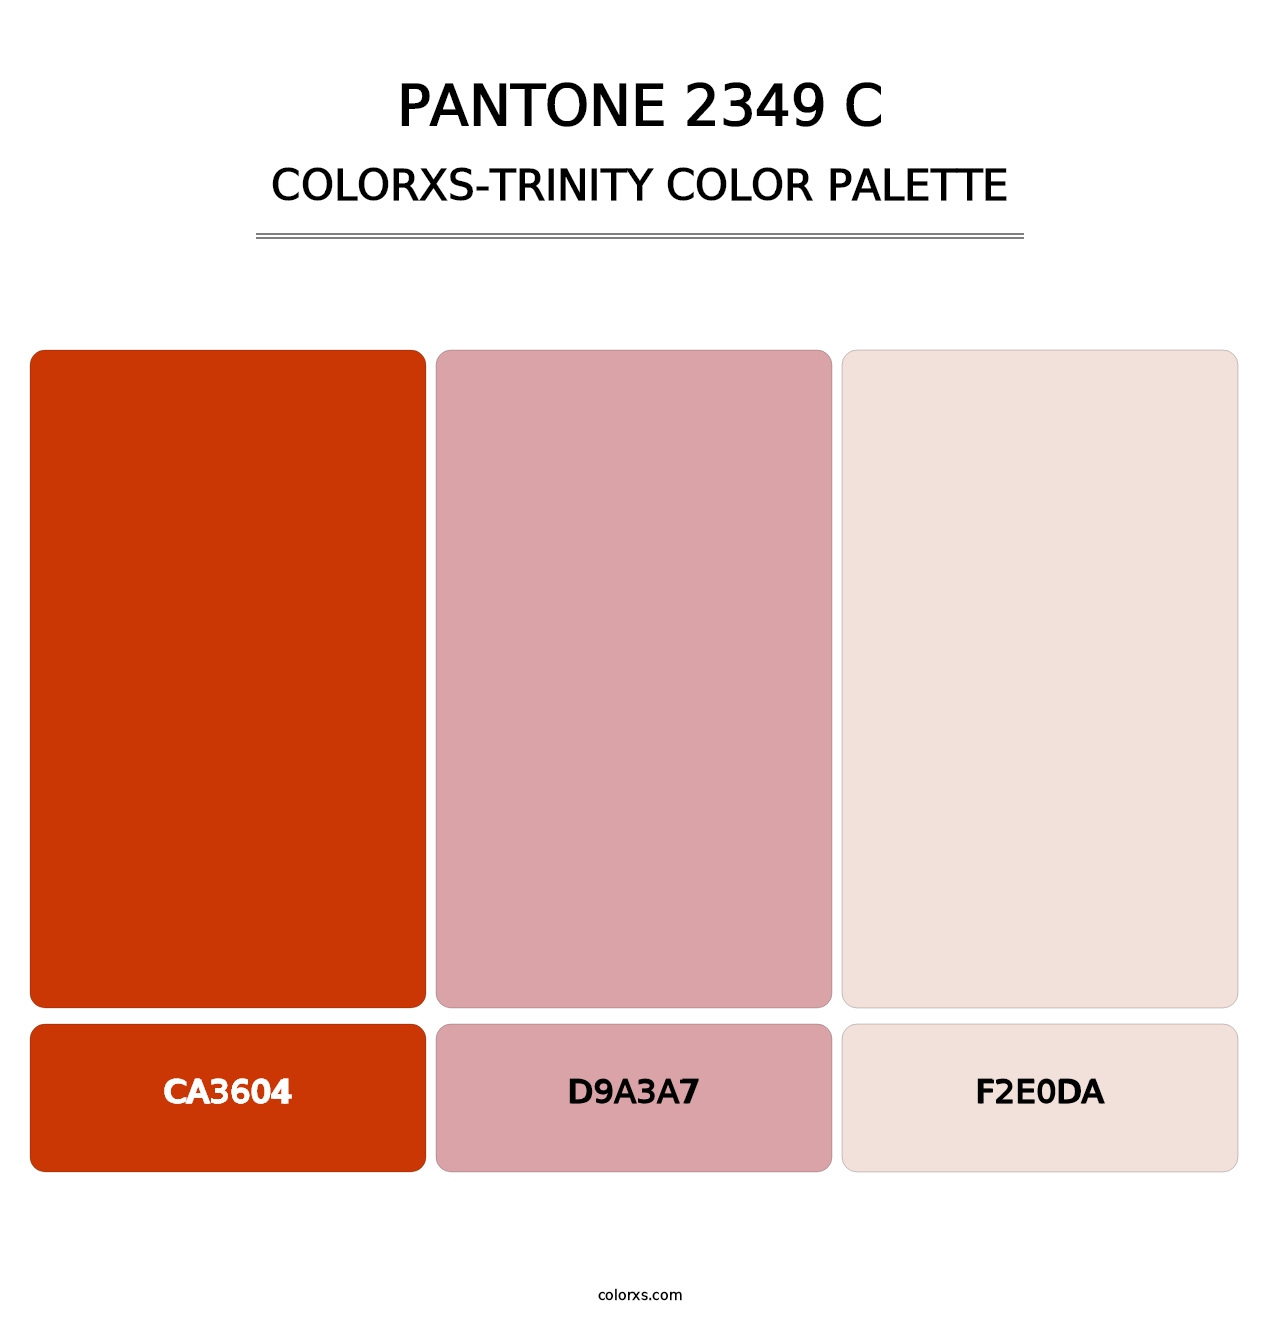 PANTONE 2349 C - Colorxs Trinity Palette